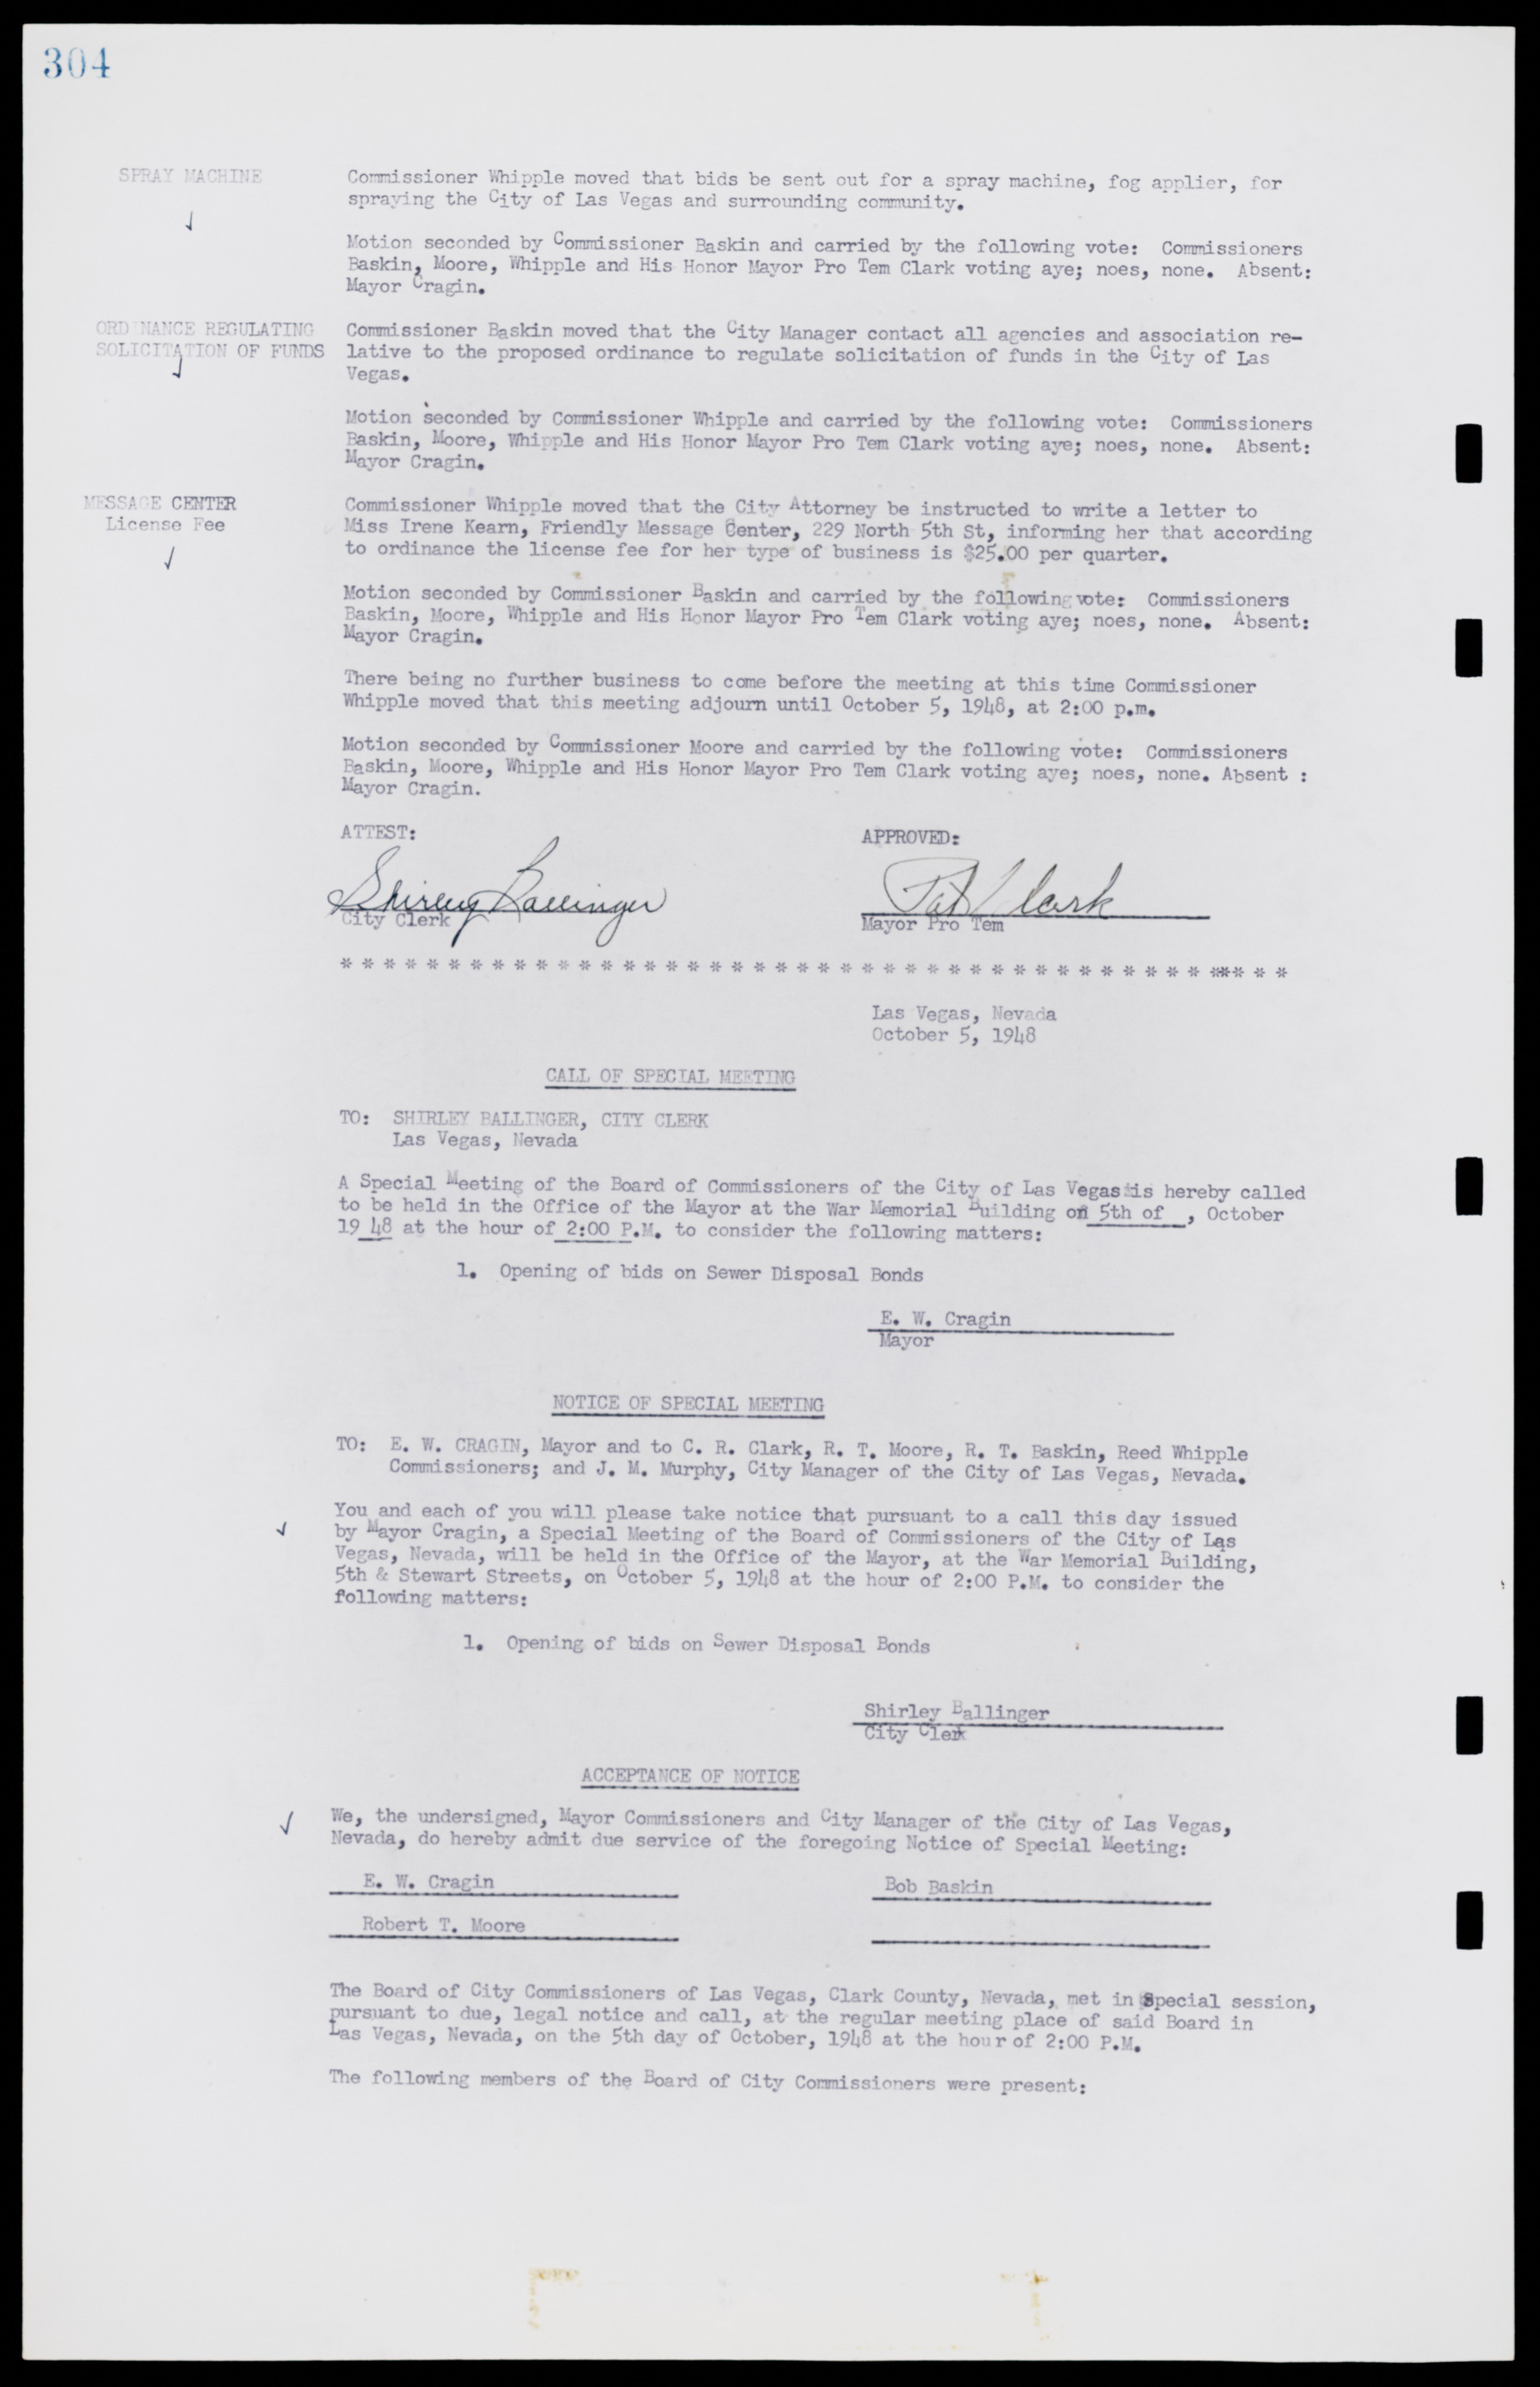 Las Vegas City Commission Minutes, January 7, 1947 to October 26, 1949, lvc000006-328